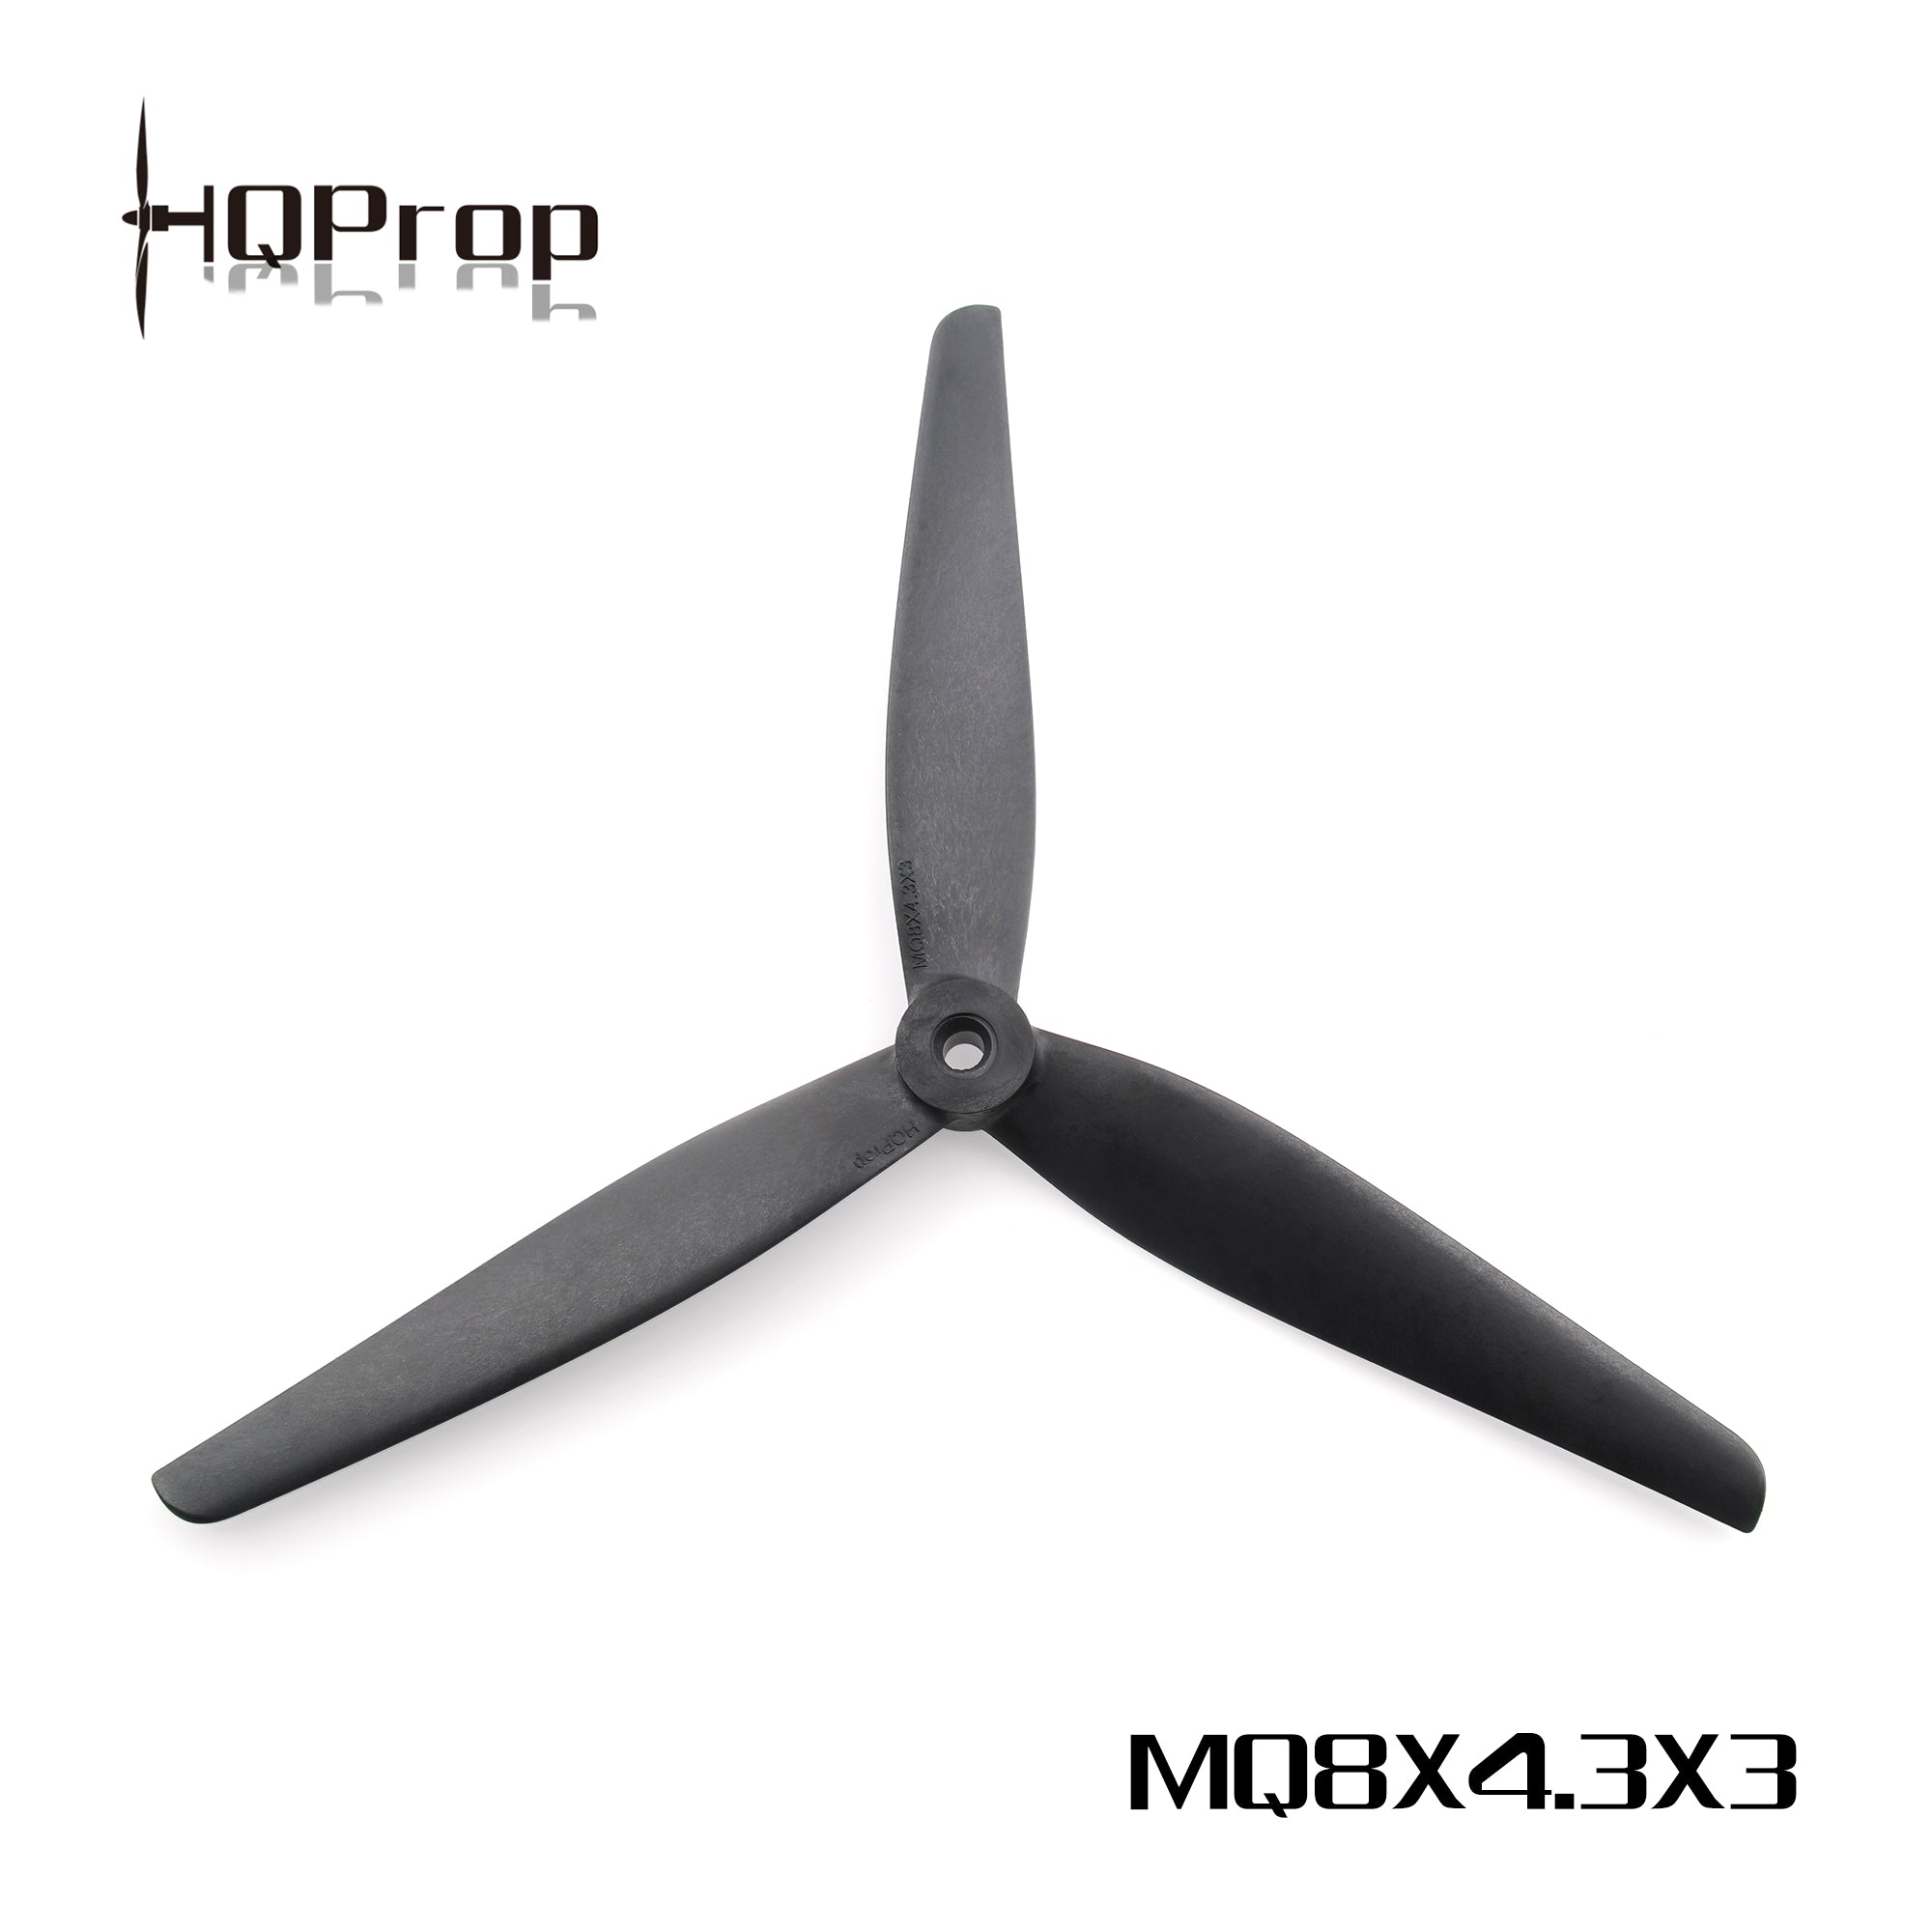 HQProp 8X4.3X3 MacroQuad Prop Black-Glass fiber Nylon Propellers (1pc)